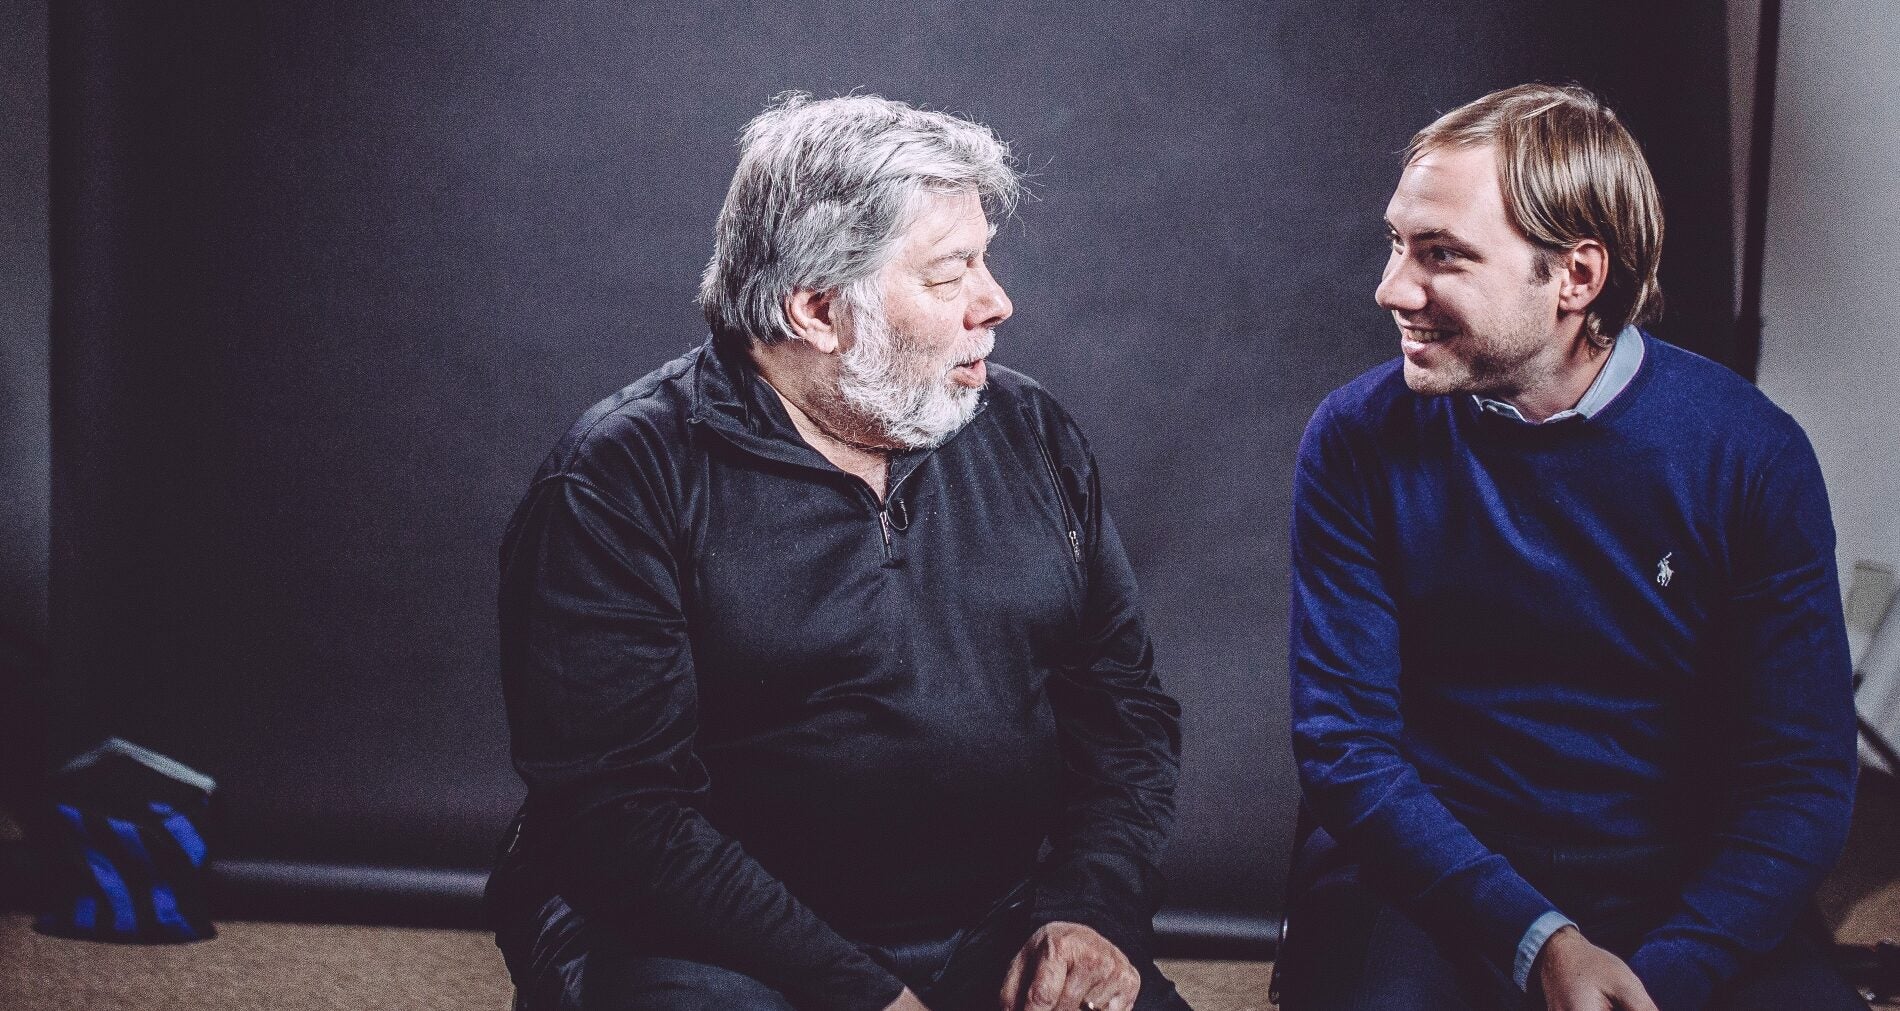 Steve Wozniak Efforce blockchain